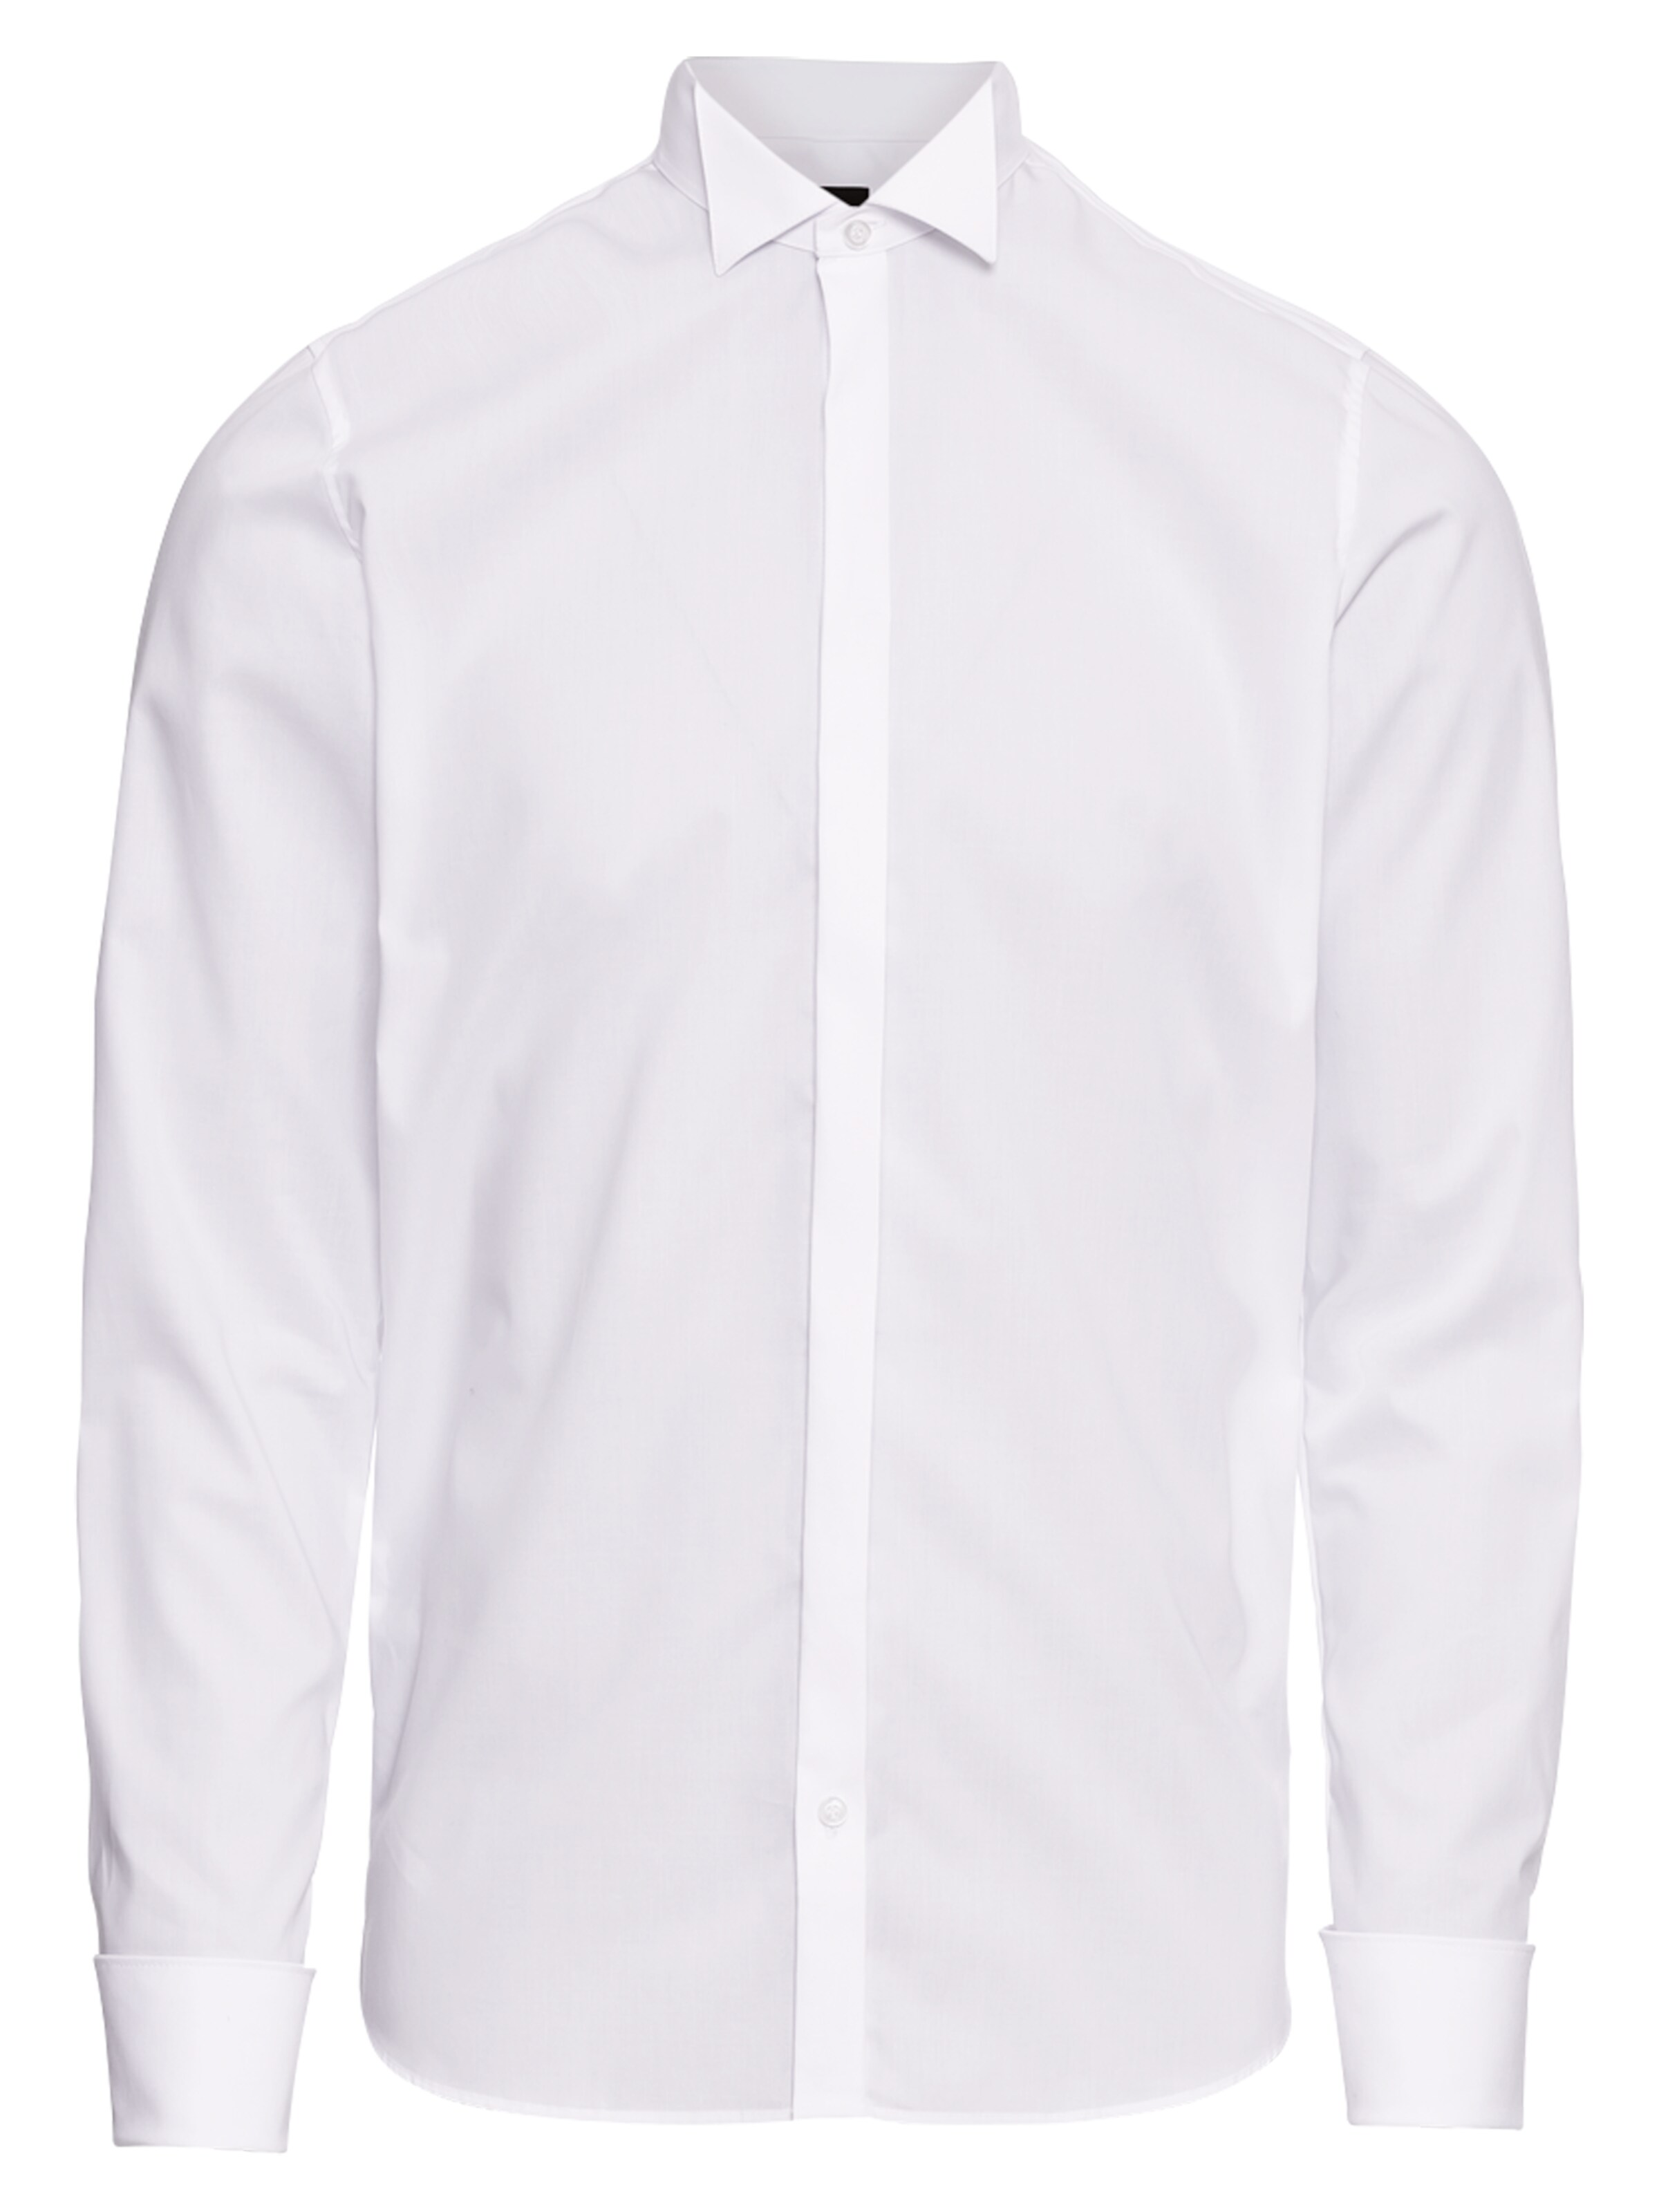 G-STAR RAW Herren Landoh Shirt Long Sleeve Smoking Hemd